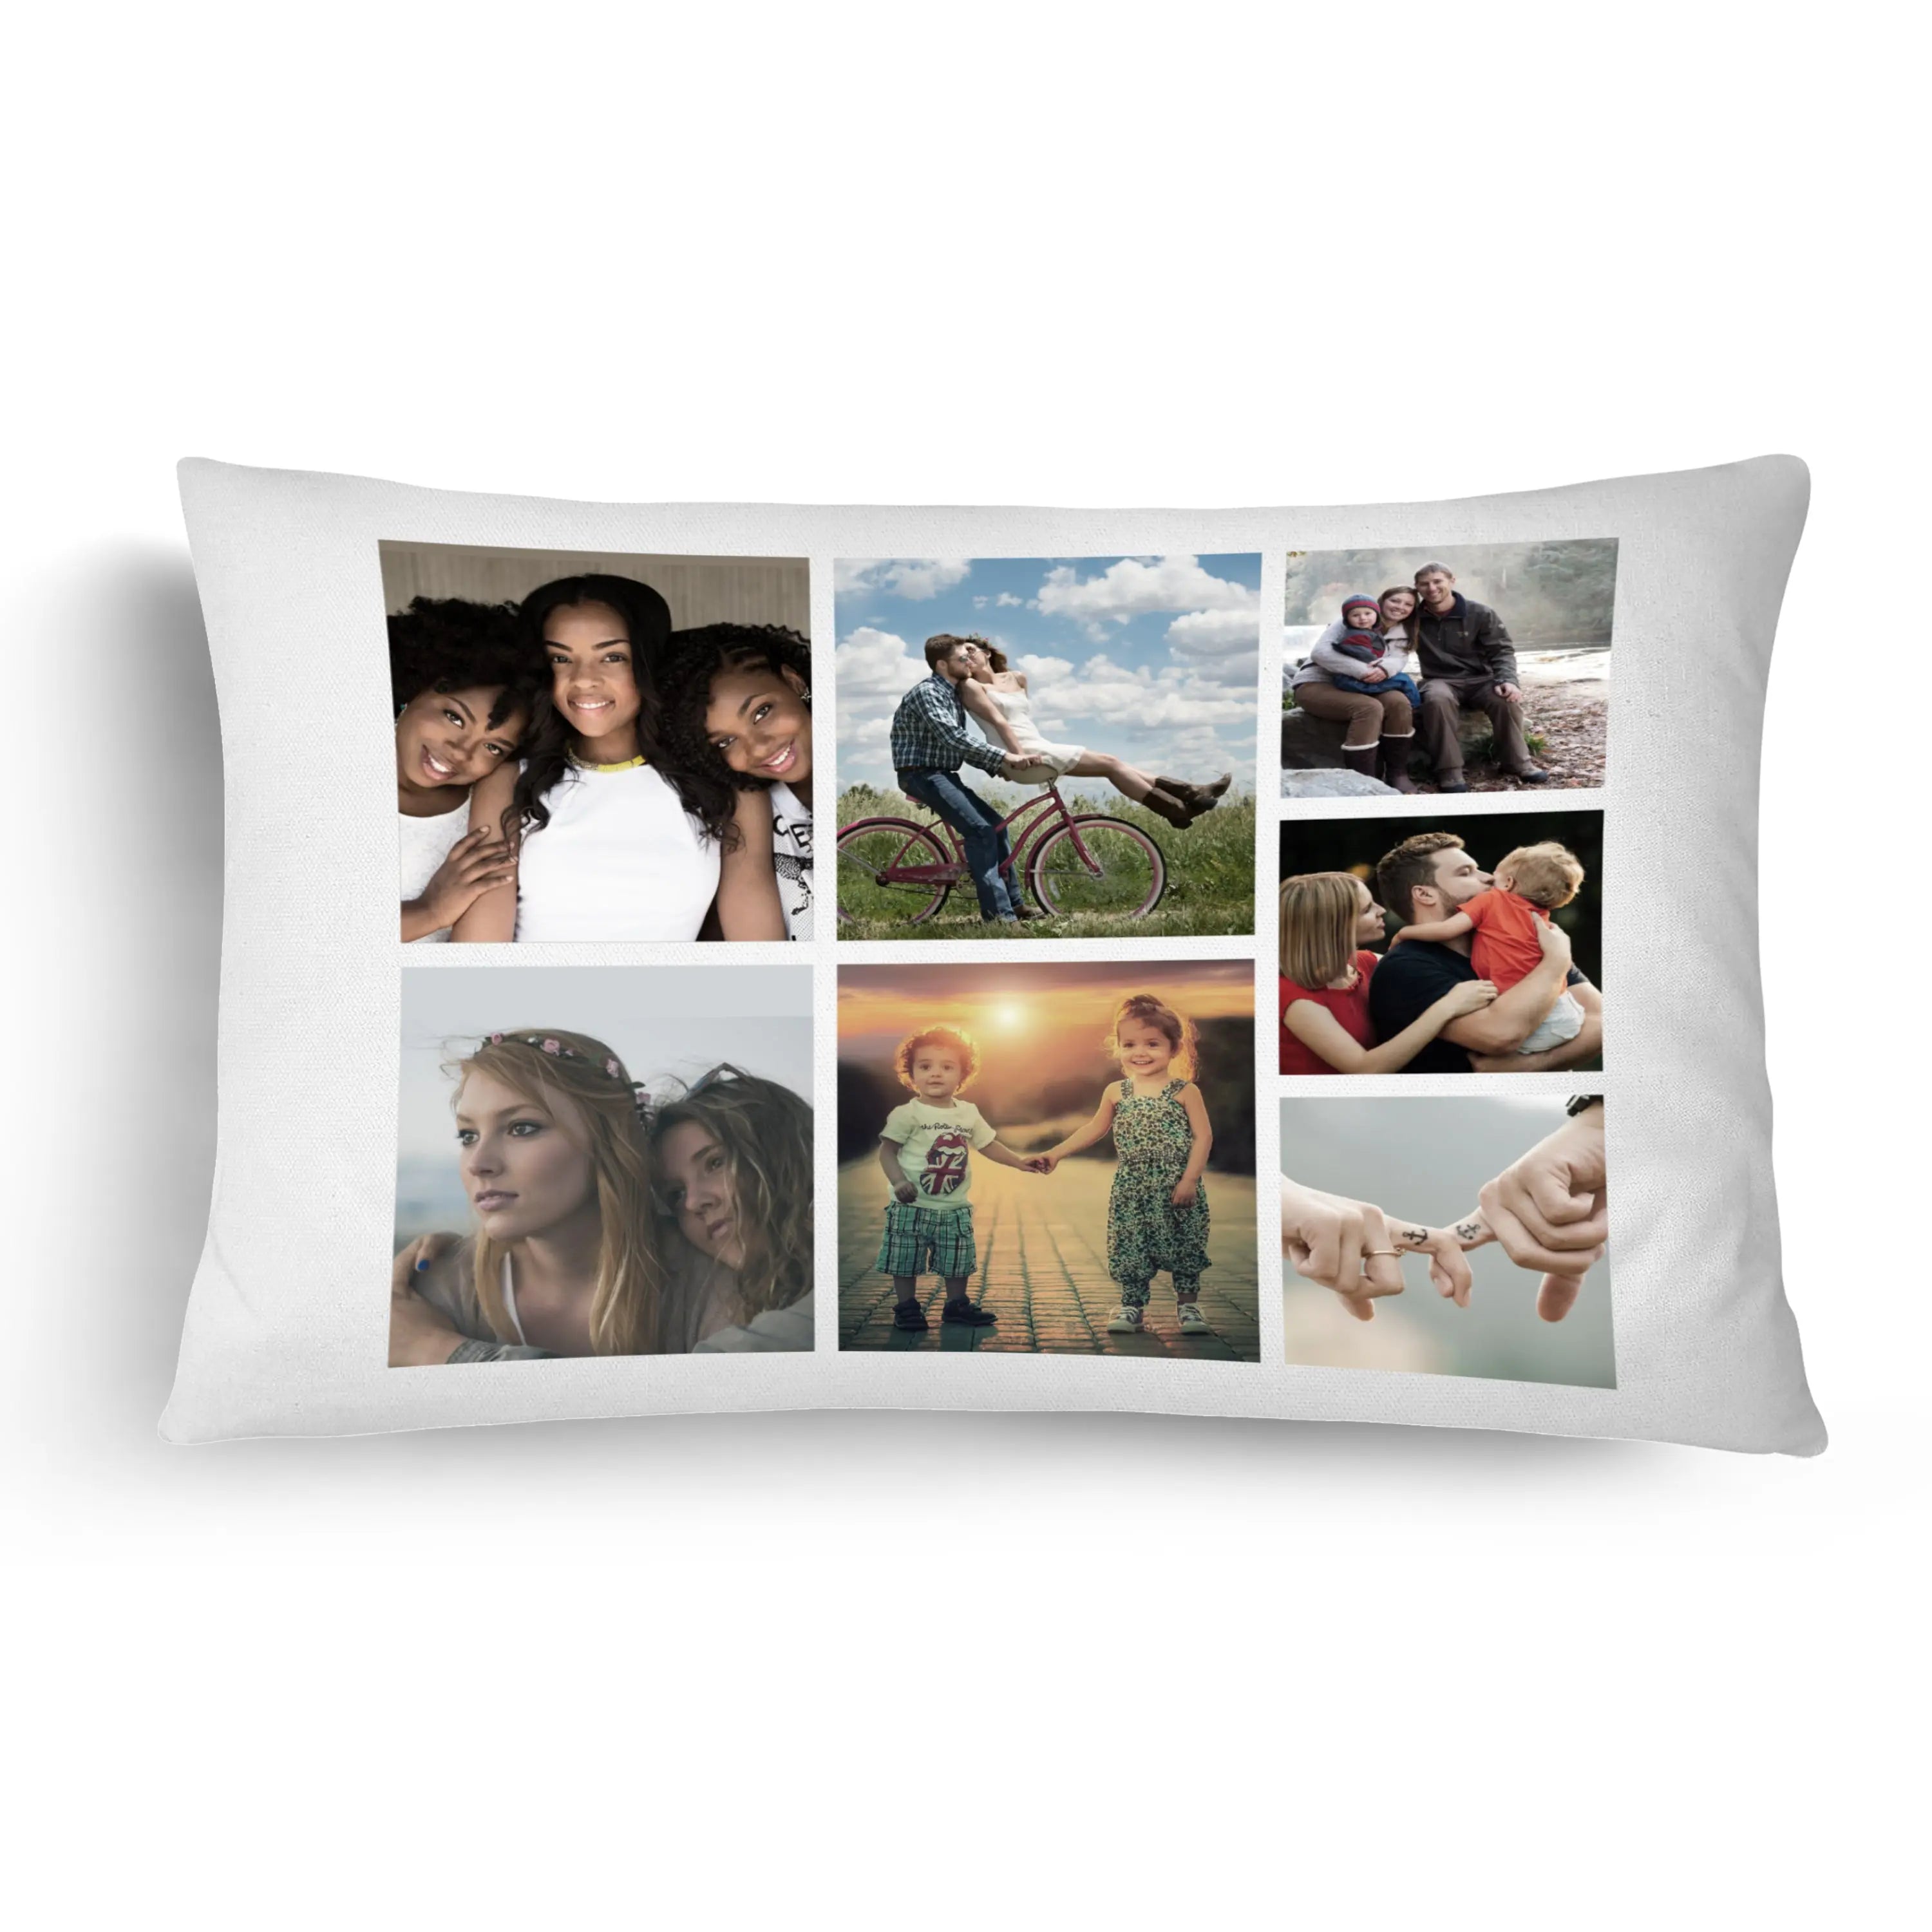 Personalised Photo Pillow case - 7 Images - Fully Customisable - CushionPop